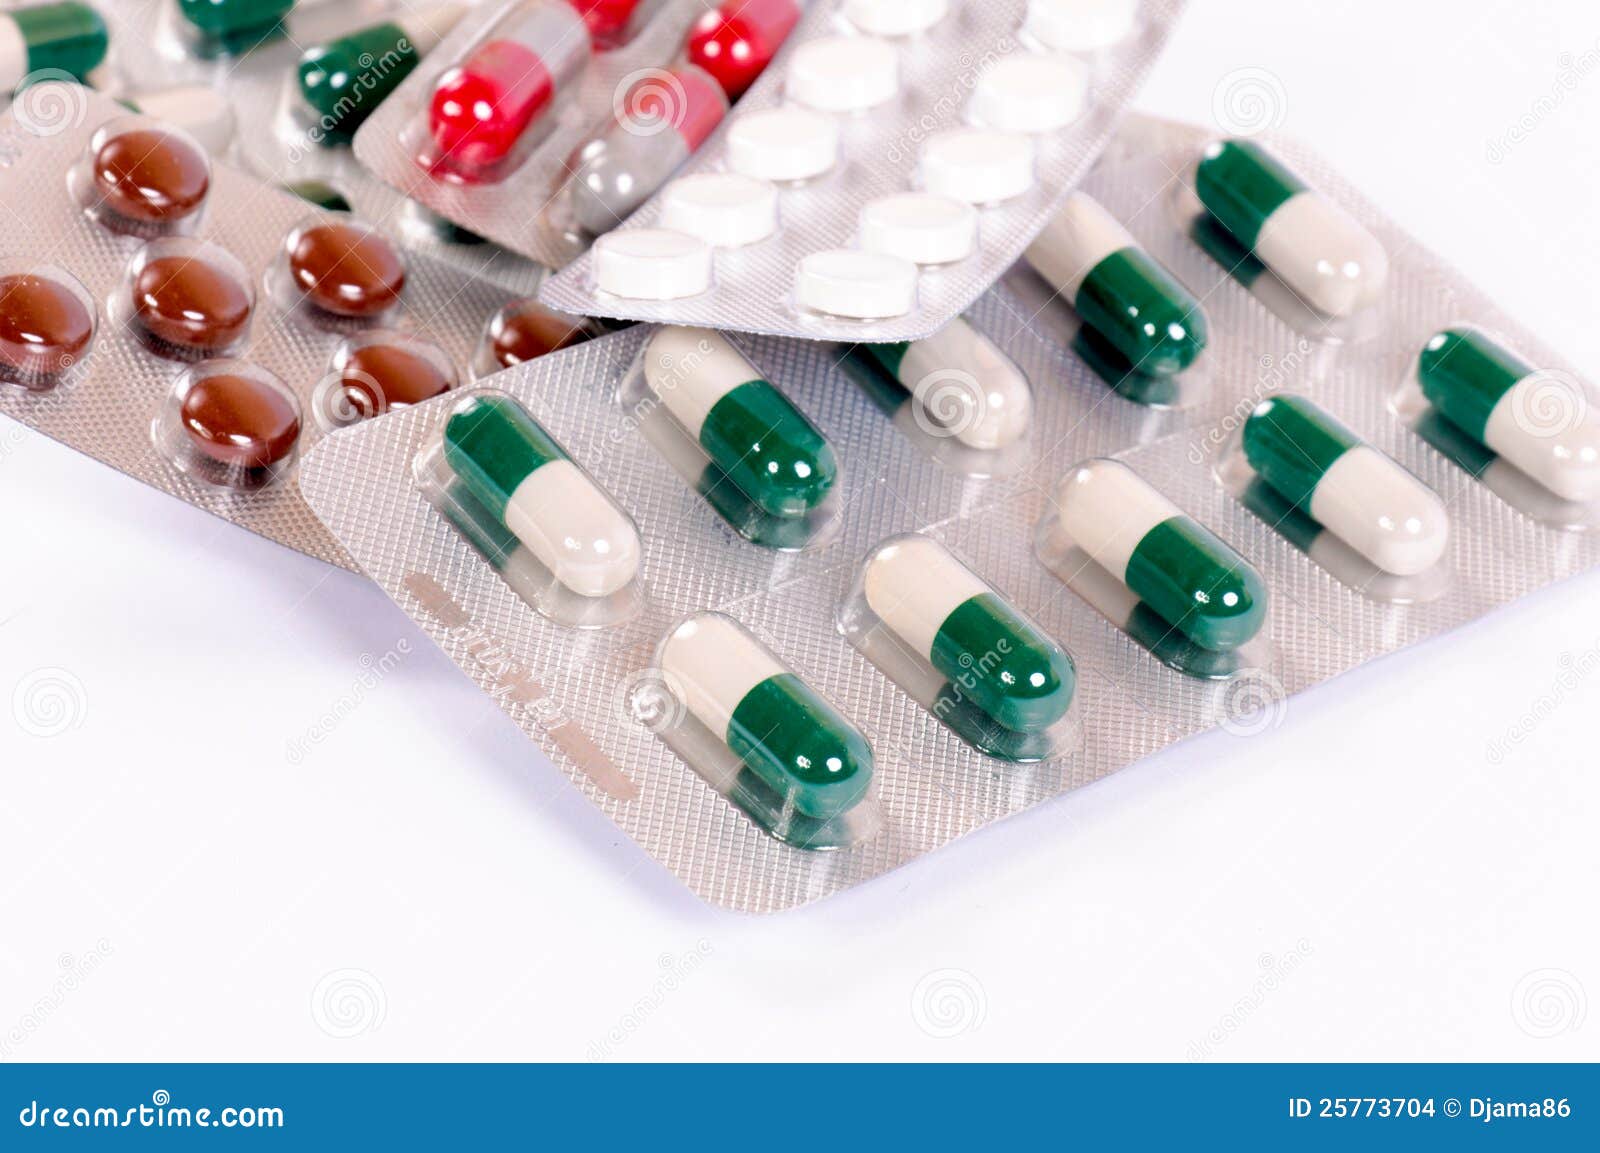 capsulas and pills